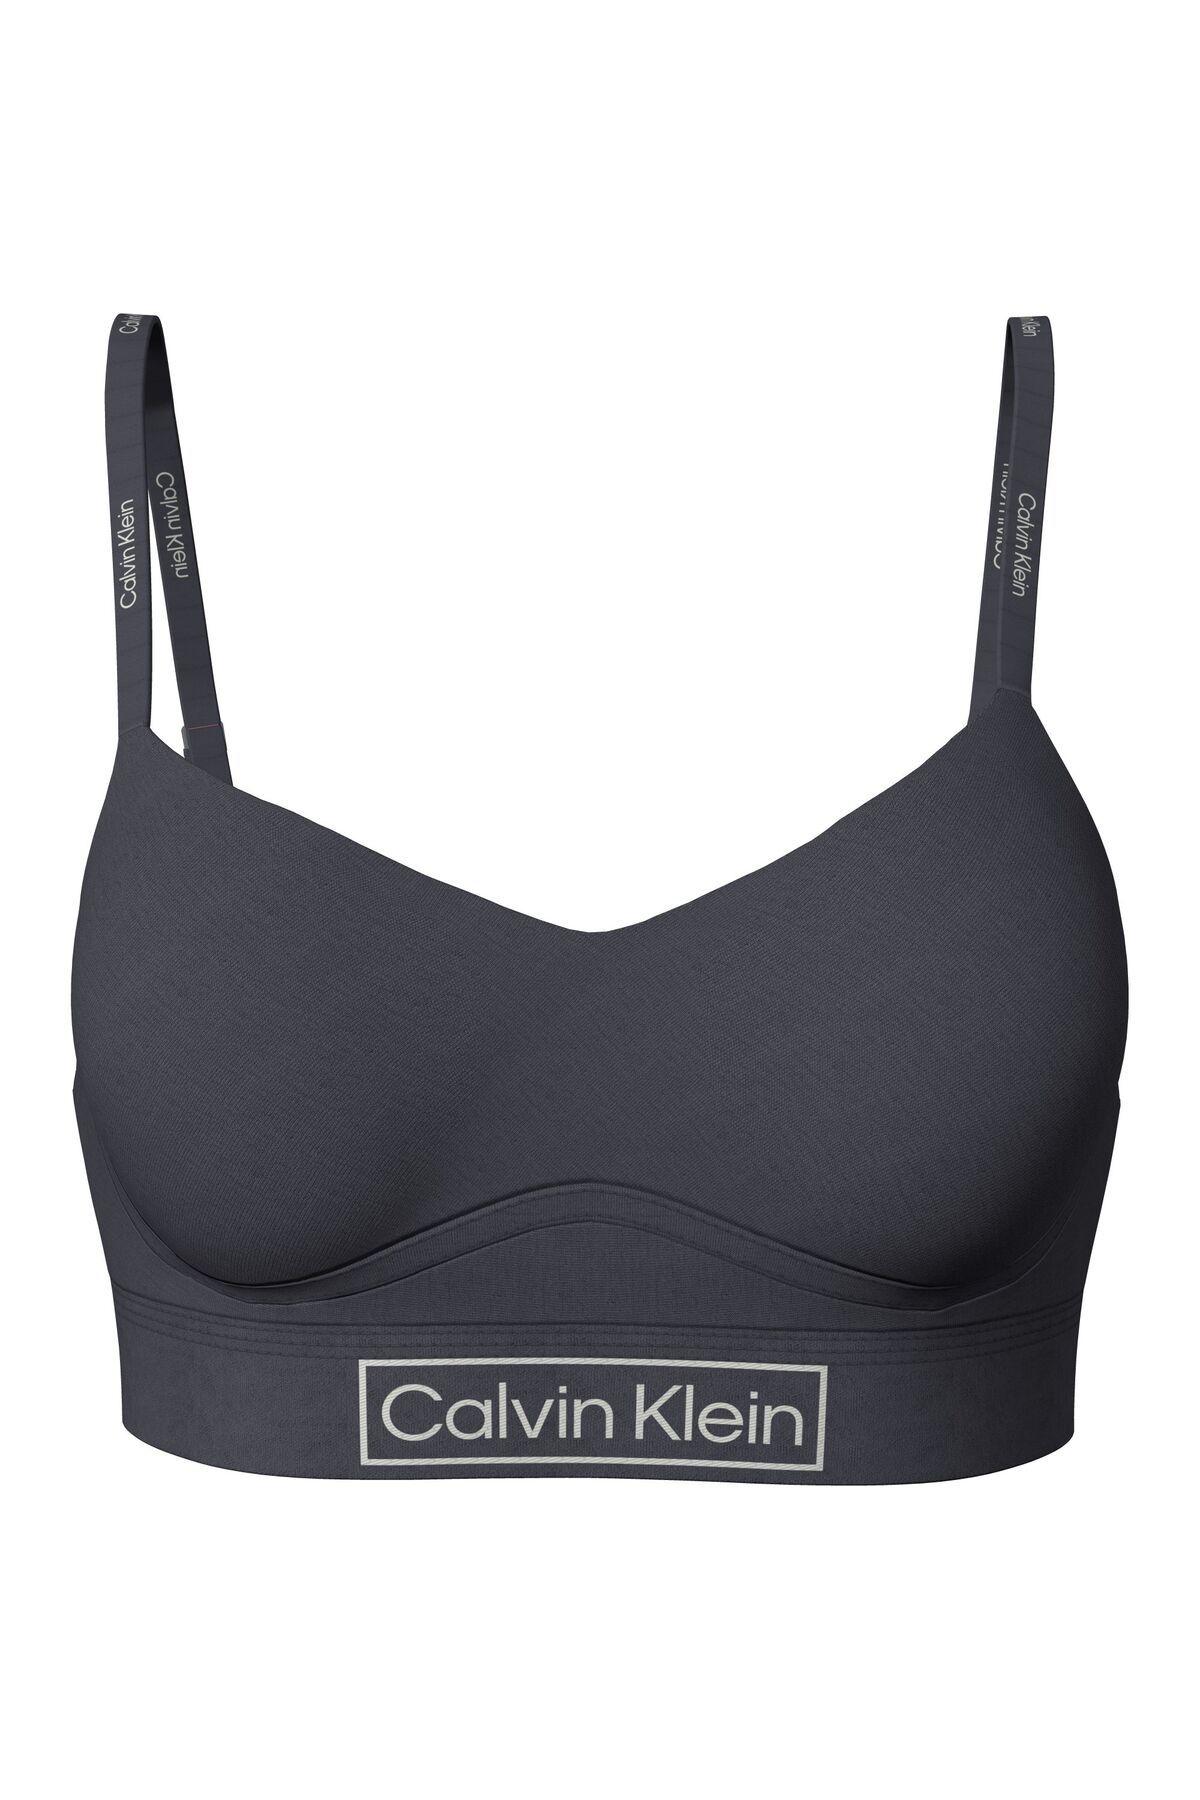 Calvin Klein Kadın Imzalı Chw Spor Sütyeni 000qf6770e-chw